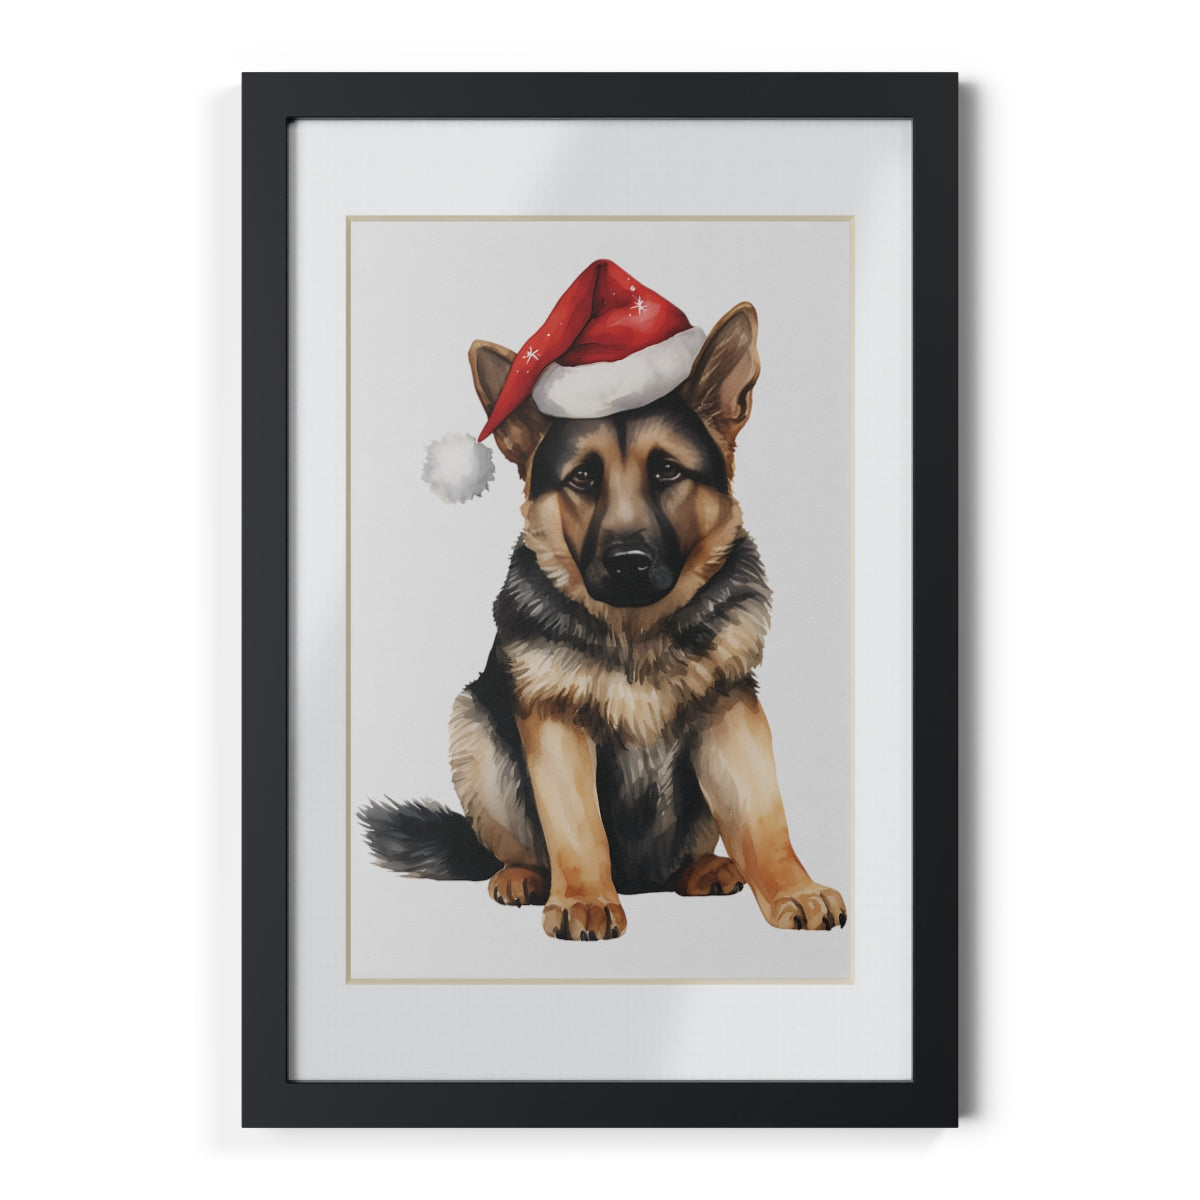 Christmas Dogs, German Shepherd - 8x12inch Vertical Framed Poster - Black MDF Frame, Removable Backing, FSC Certified